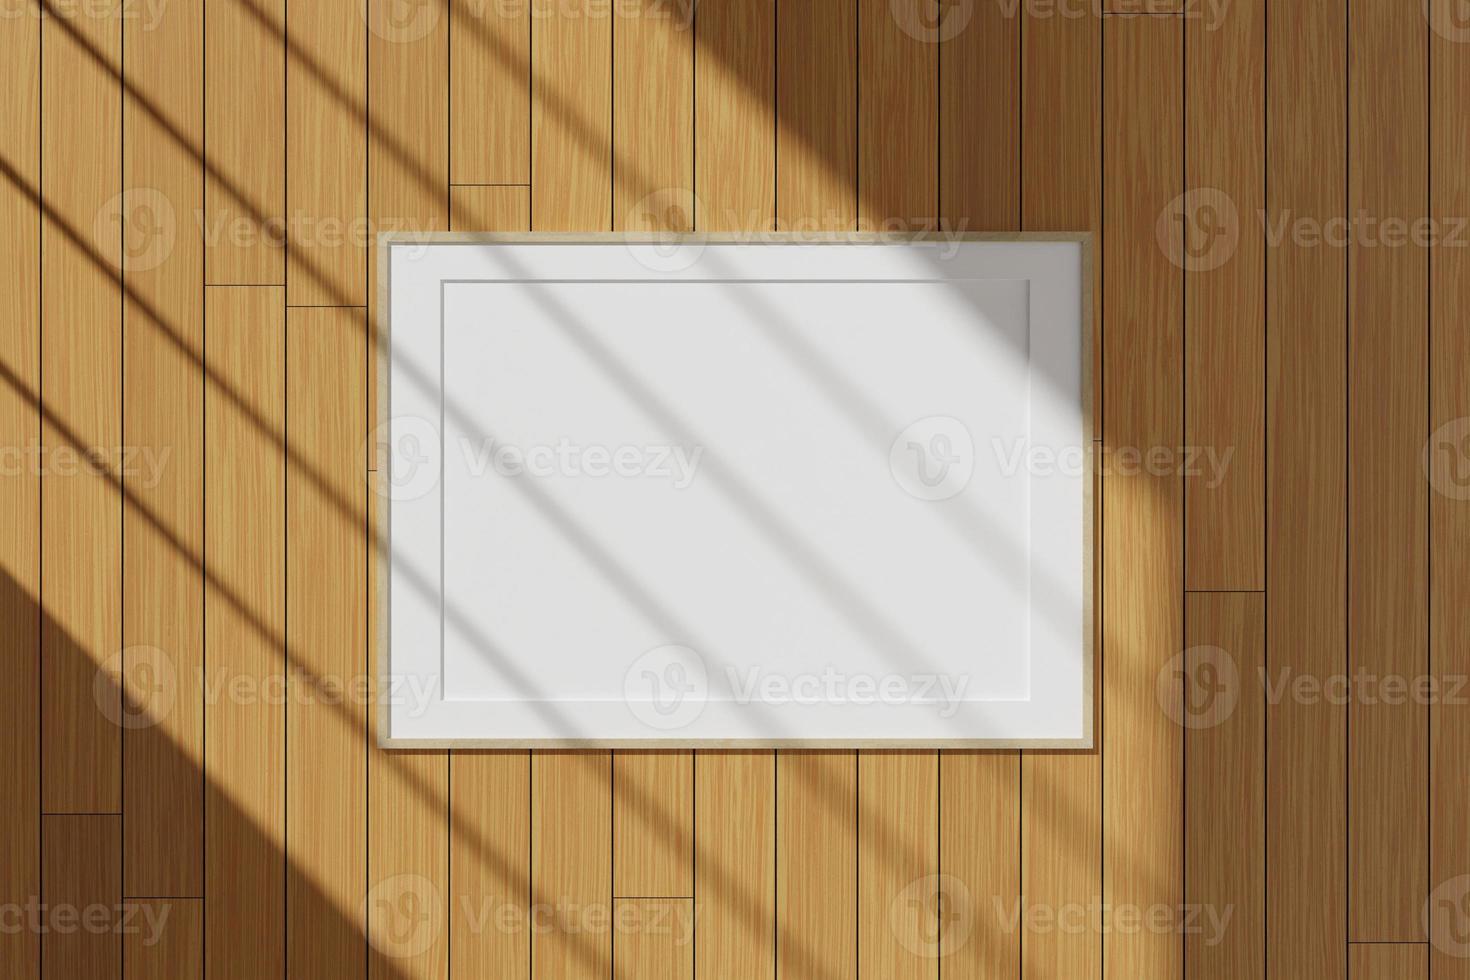 cartel de madera horizontal o maqueta de marco de fotos colgado en la pared con sombra de ventana. Representación 3D.